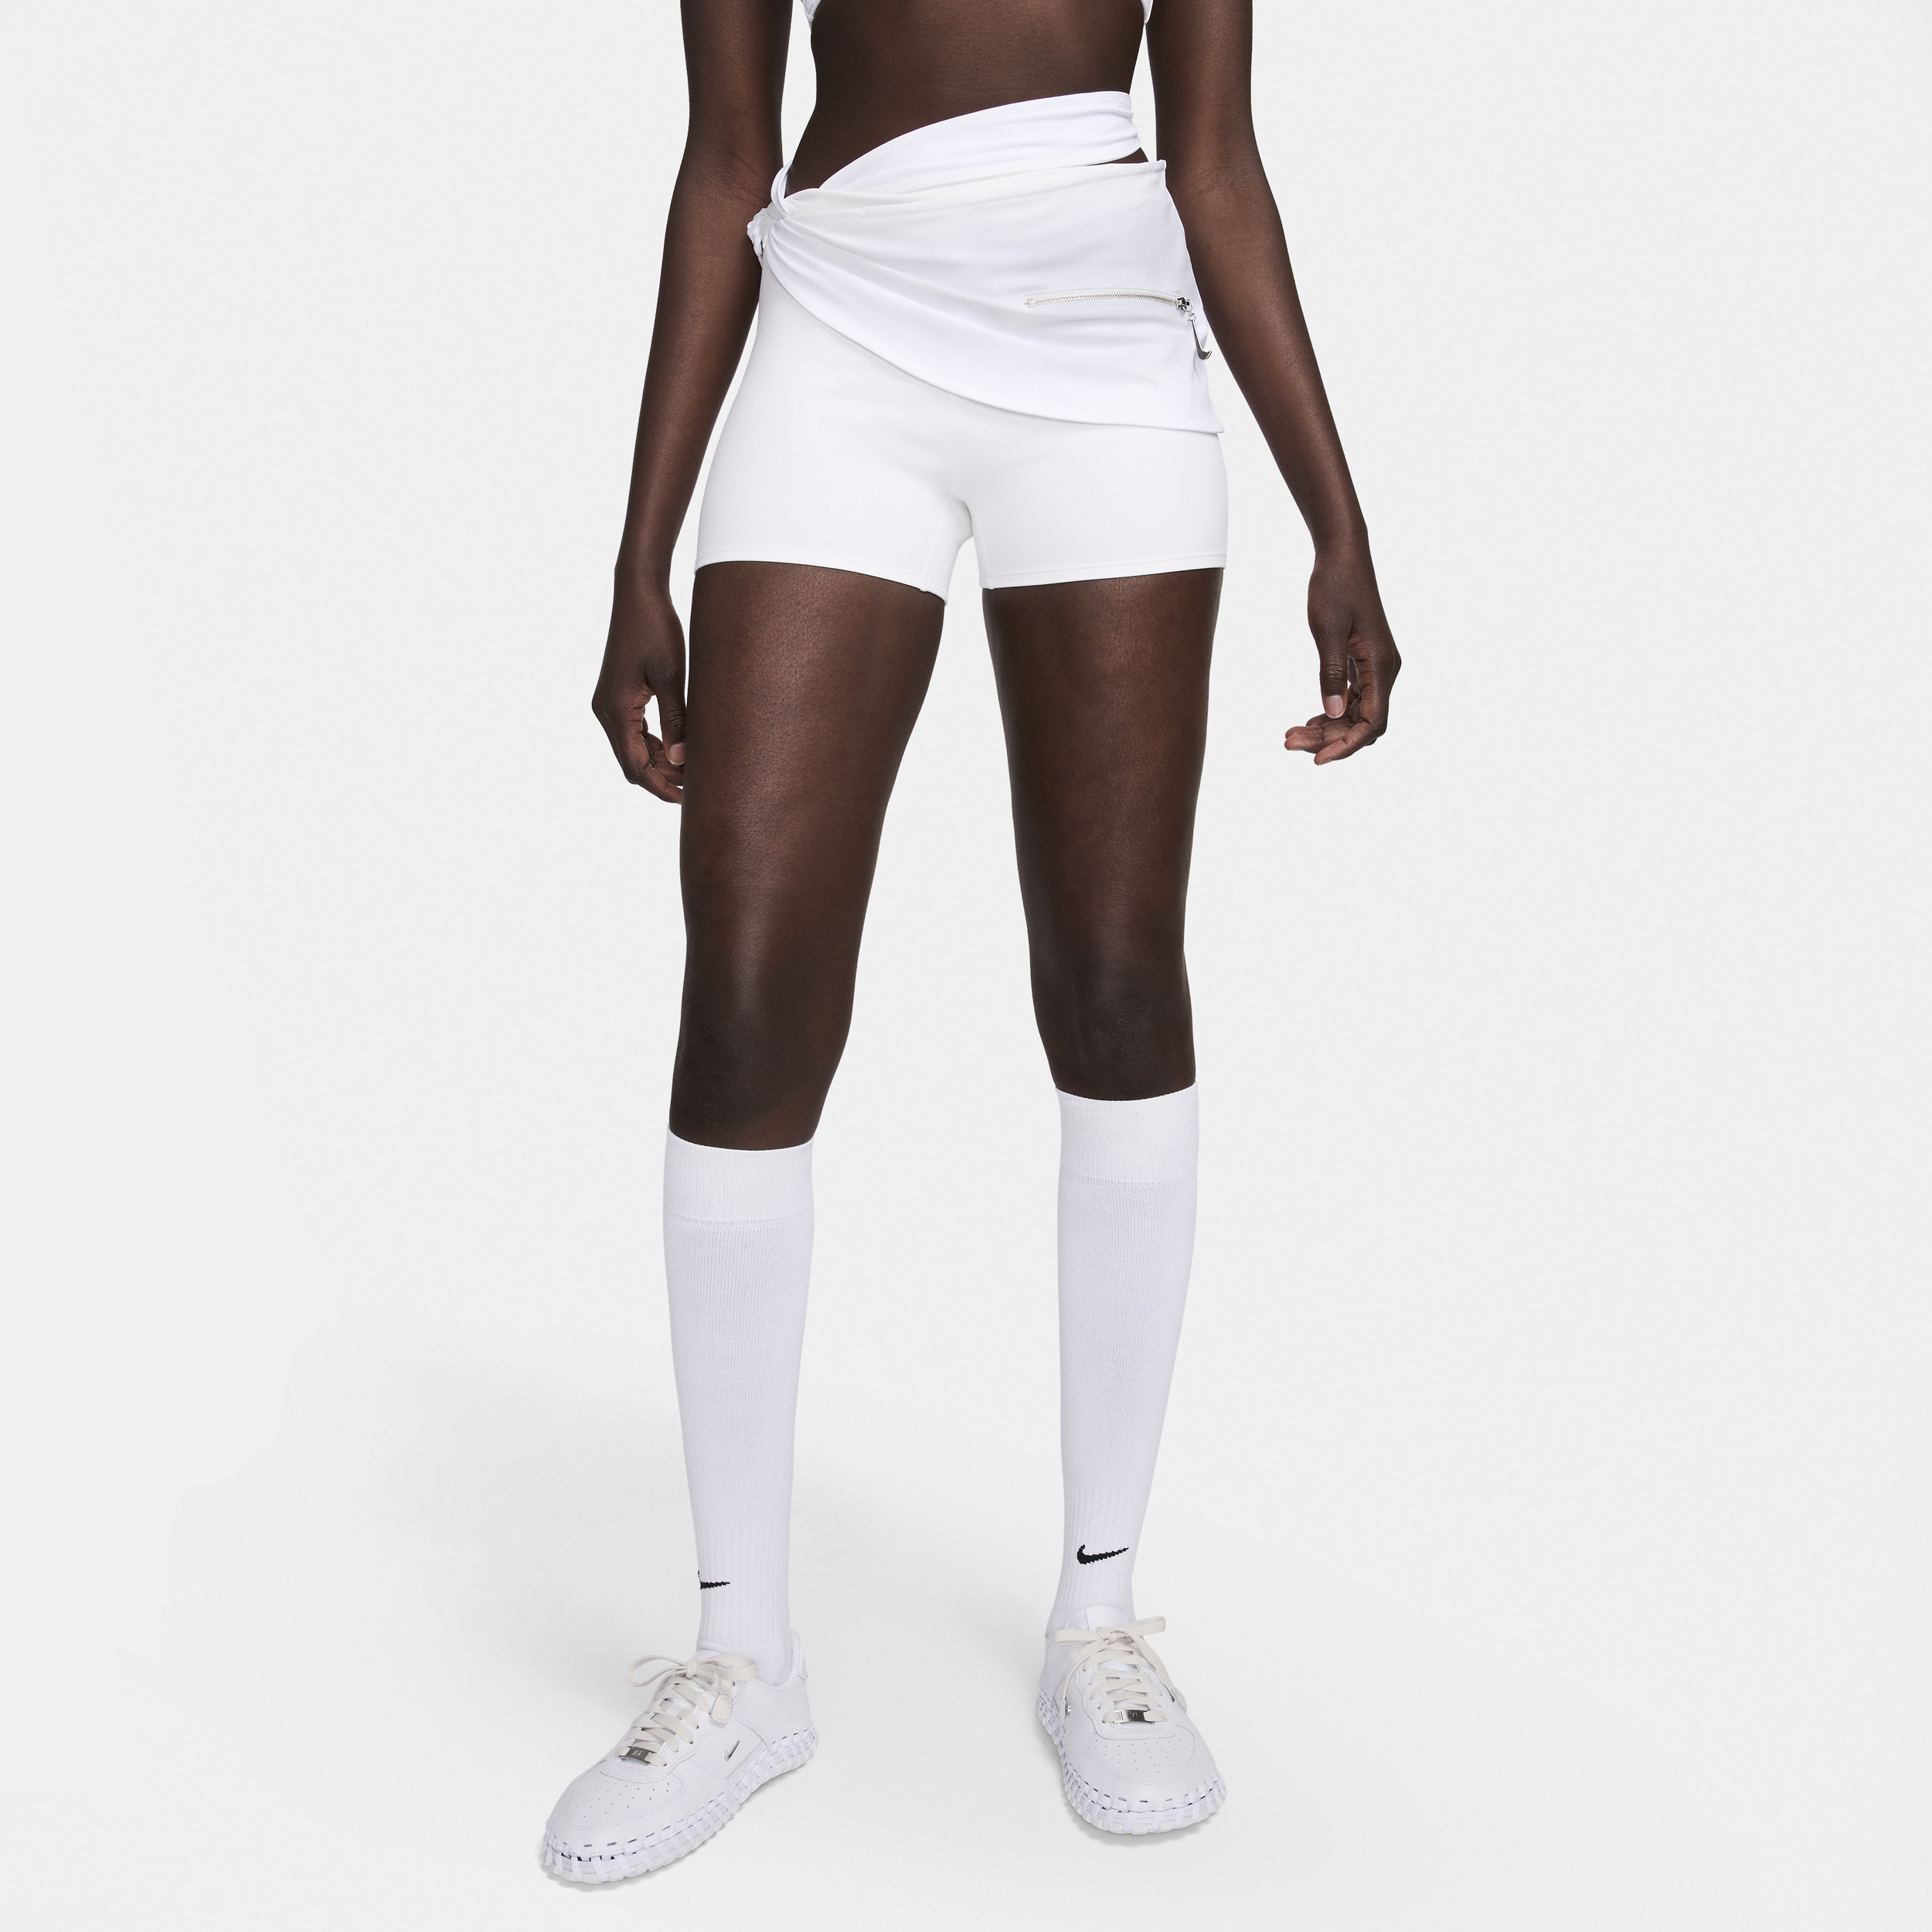 Shorts multistrato Nike x Jacquemus – Donna - Bianco